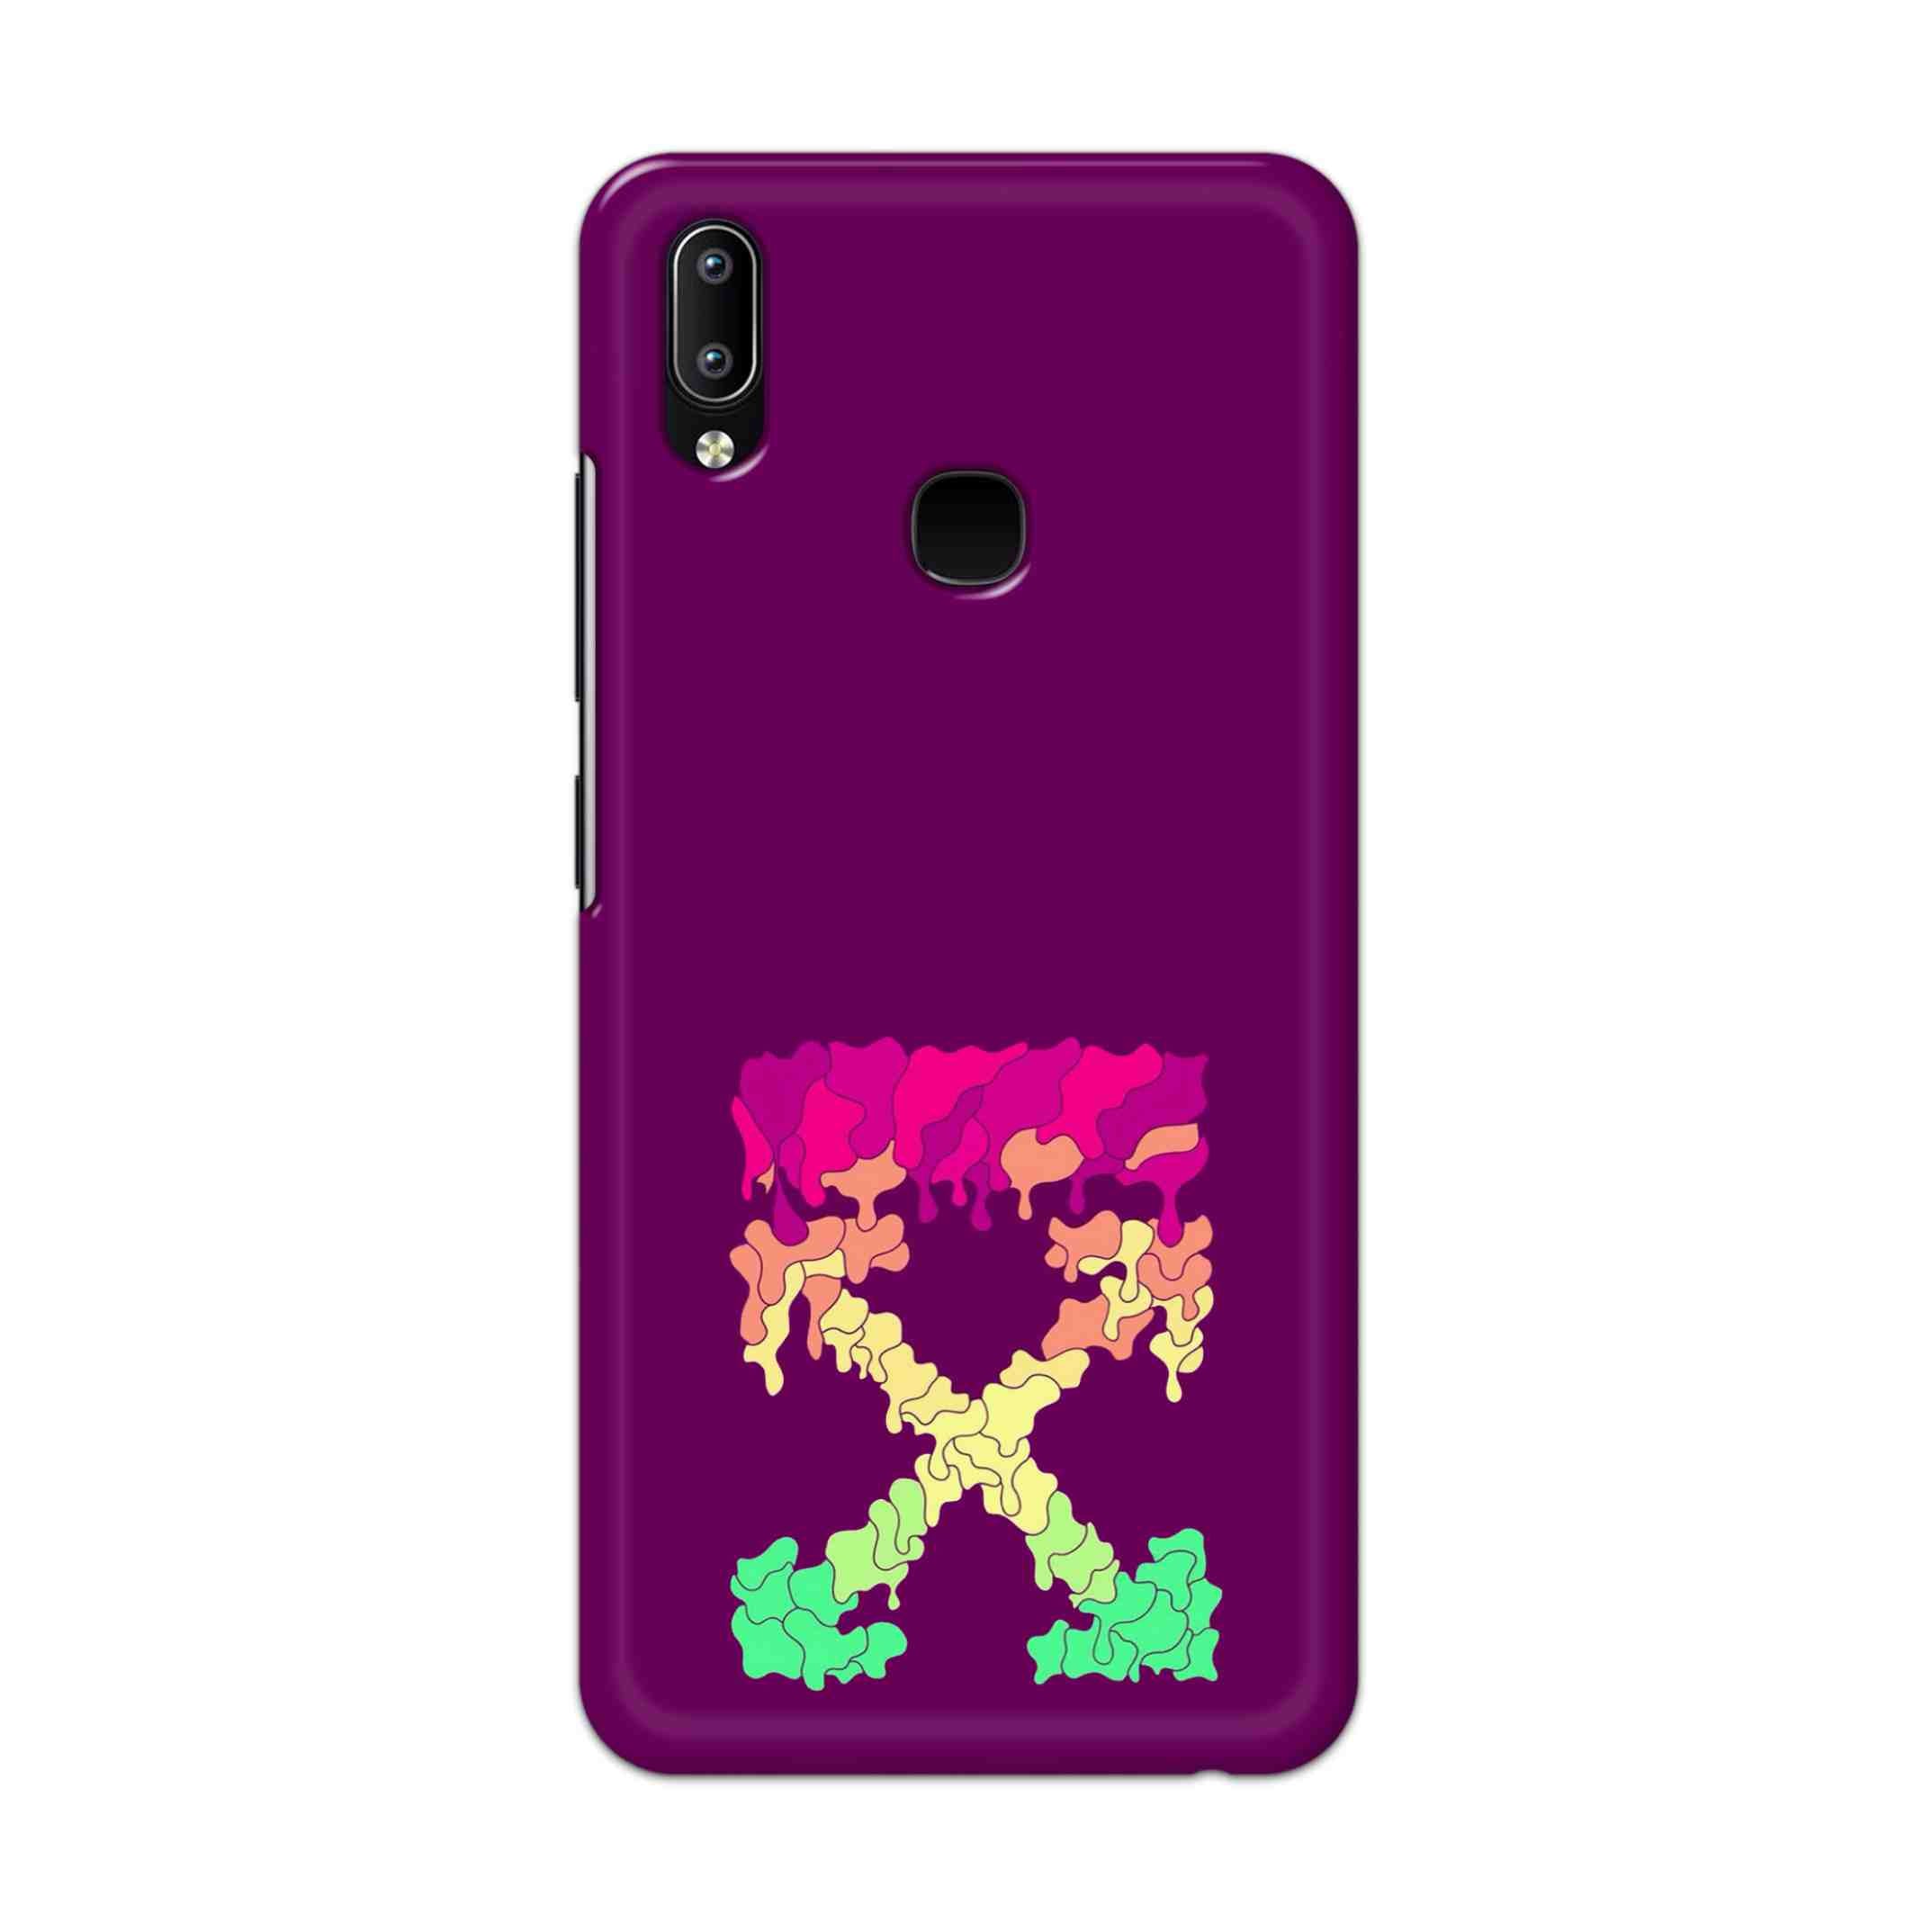 Buy X.O Hard Back Mobile Phone Case Cover For Vivo Y95 / Y93 / Y91 Online